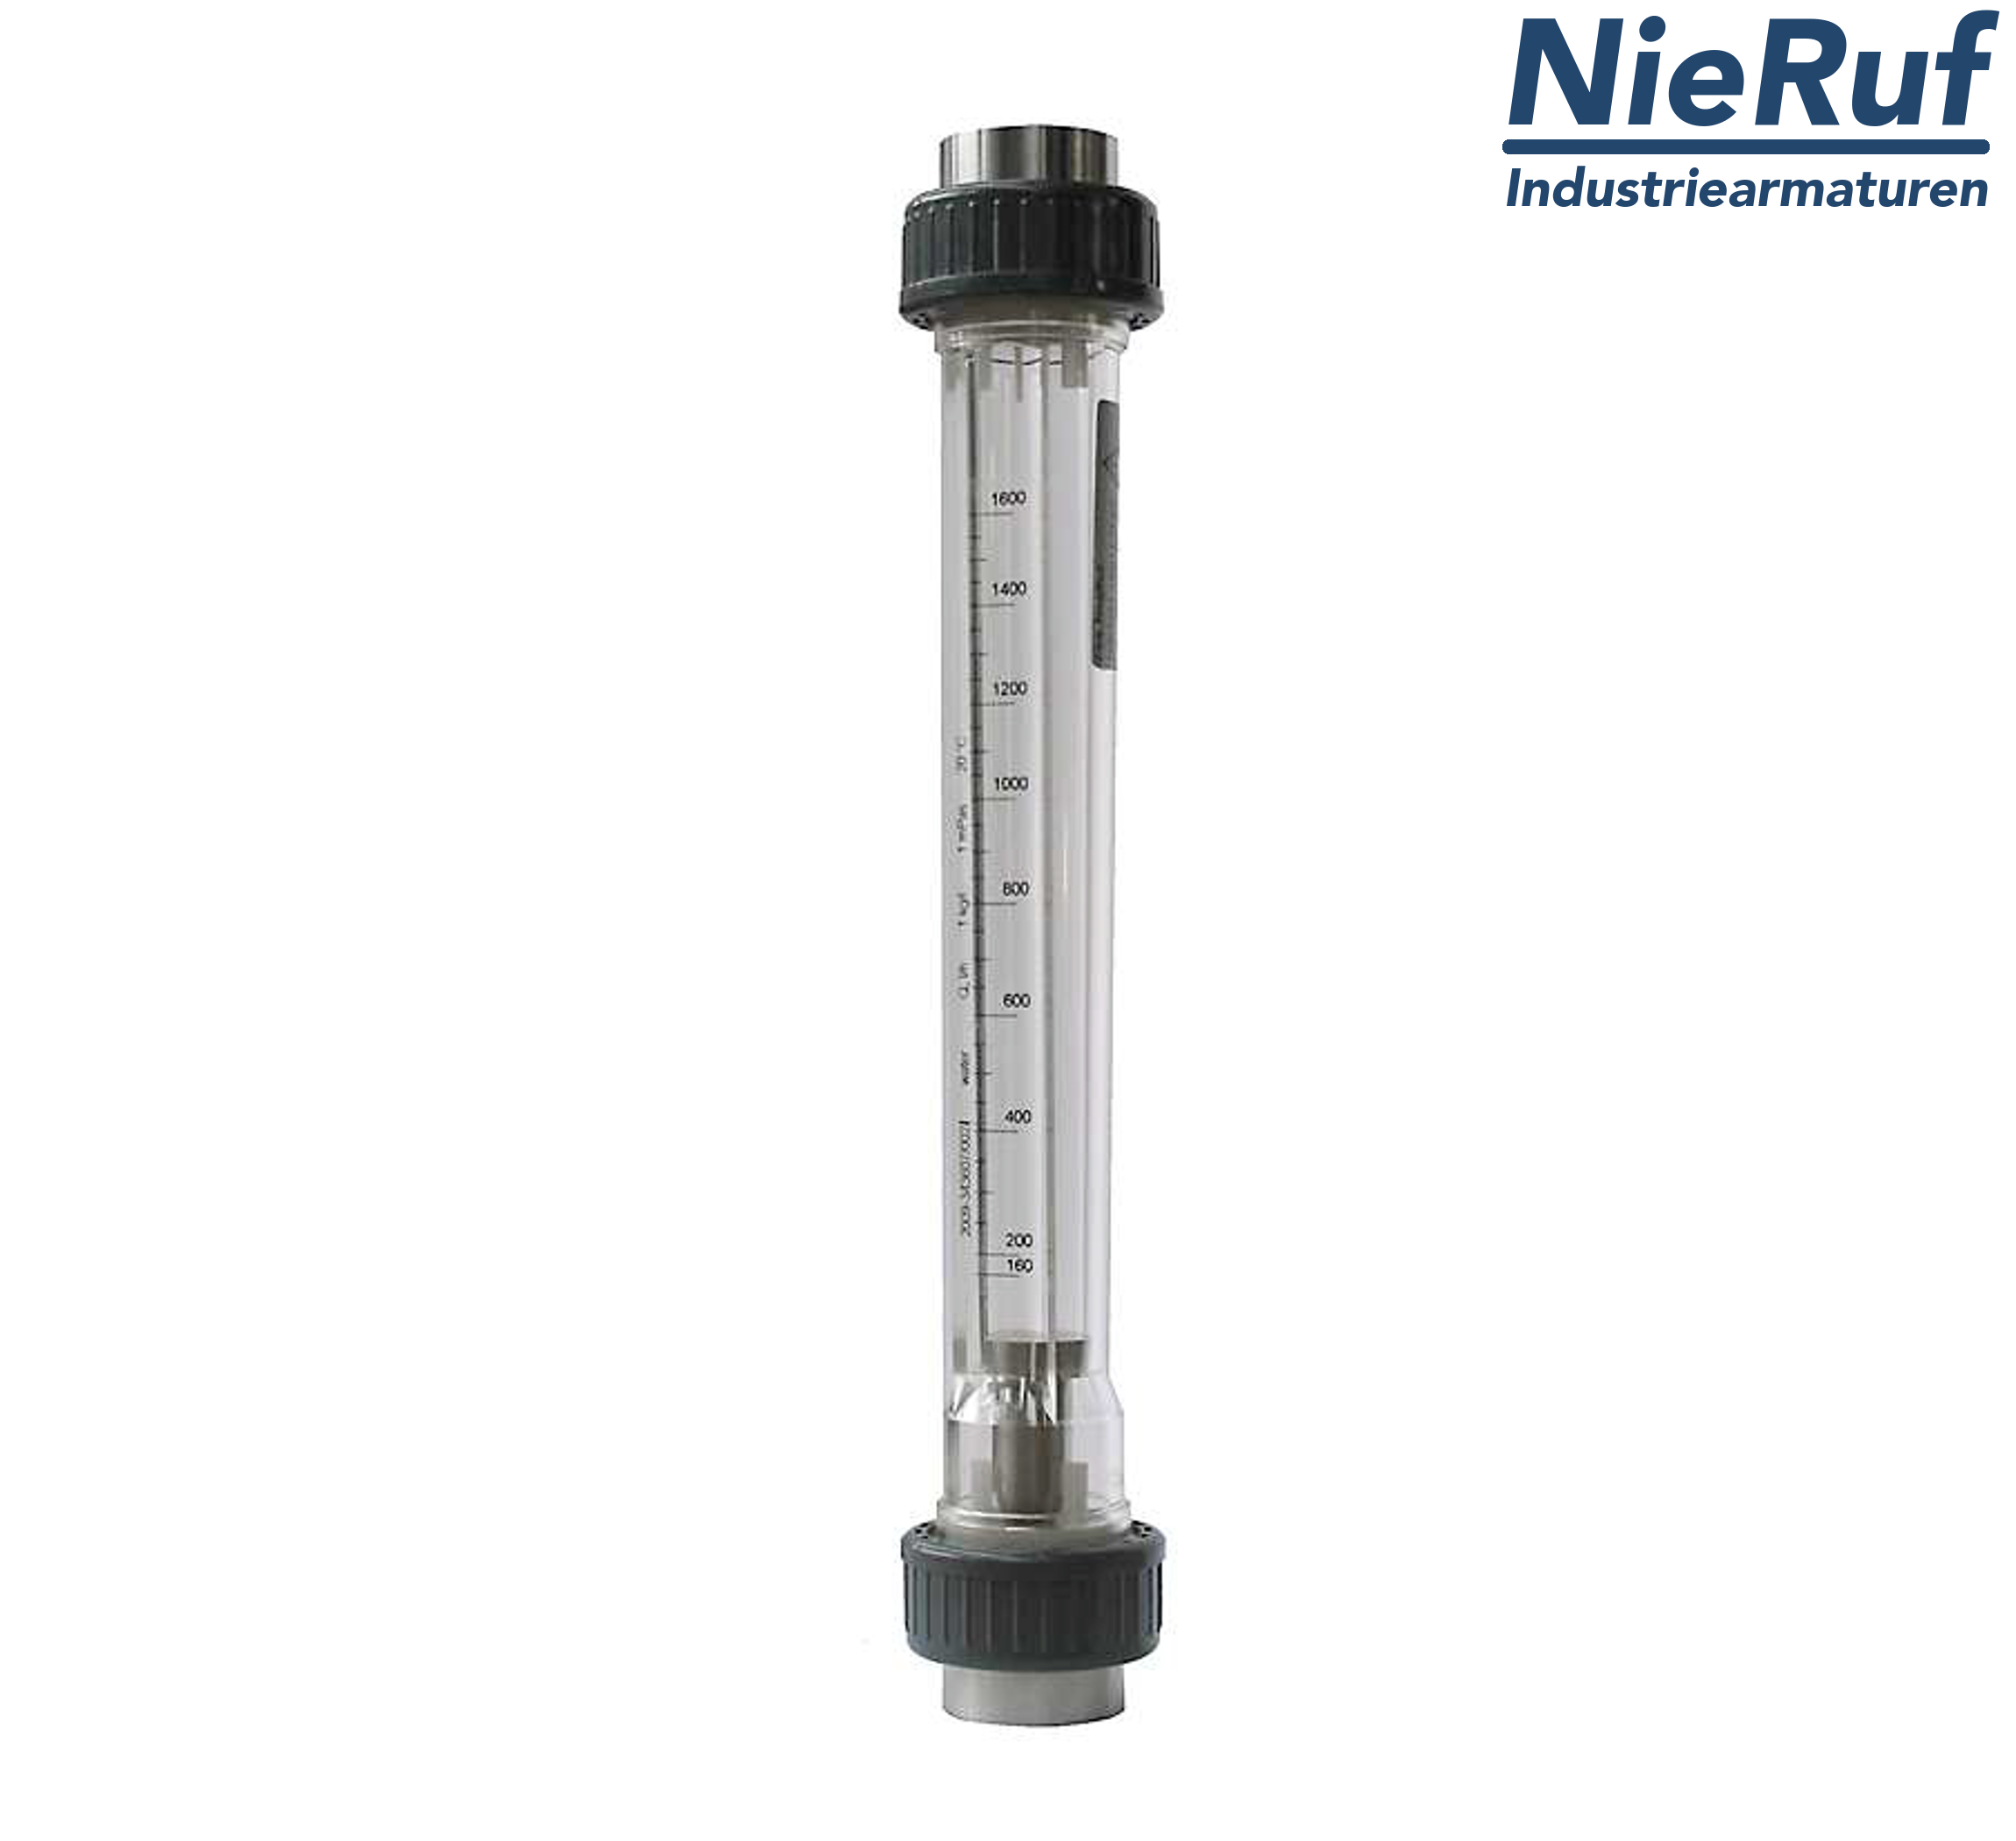 Variable area flowmeter 1" inch NPT 160.0 - 1600 l/h water NBR